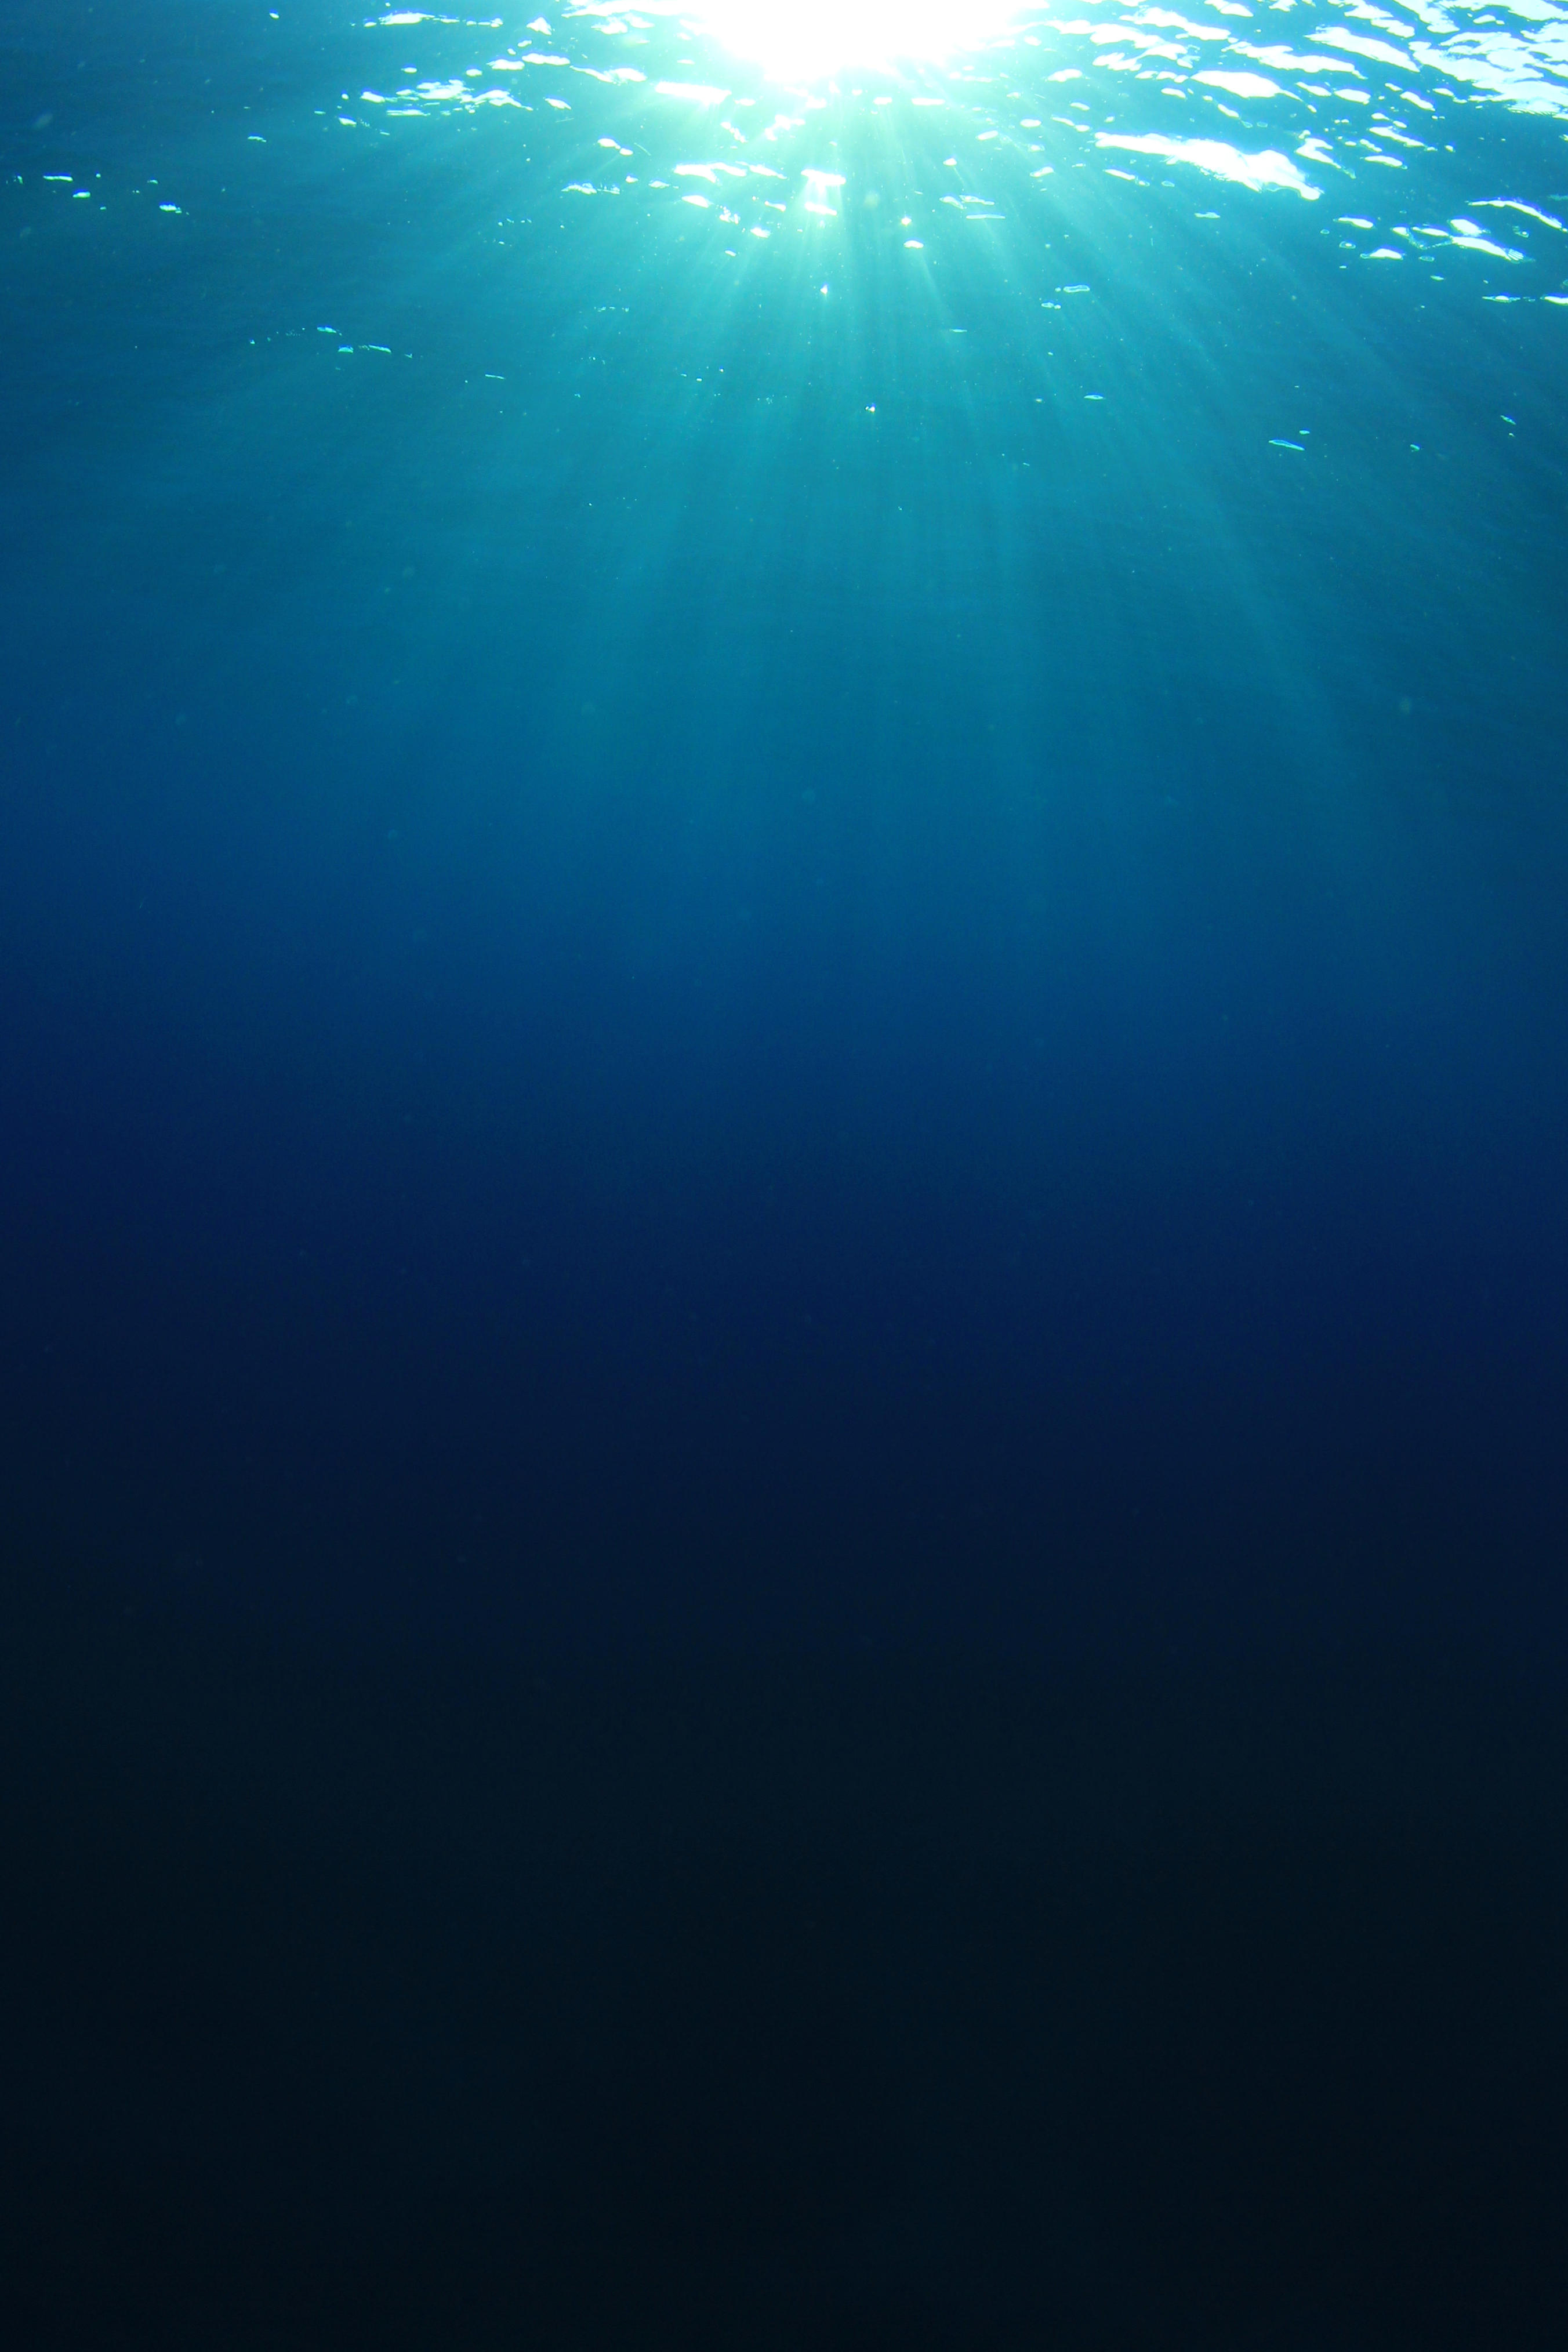 Underwater abstract blue ocean background -